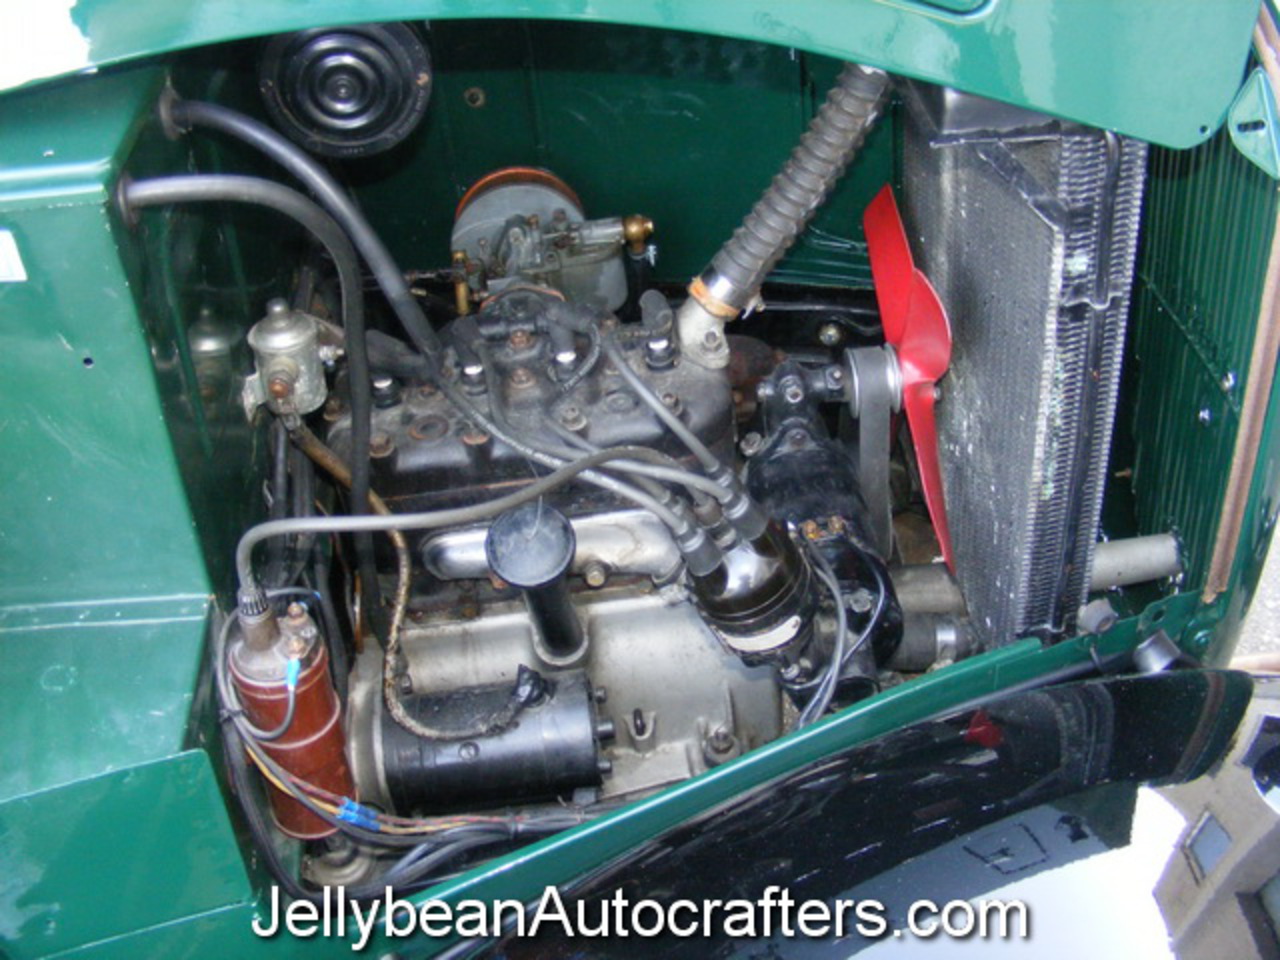 Jellybean AutoCrafters - 1936 Austin 7 Ruby